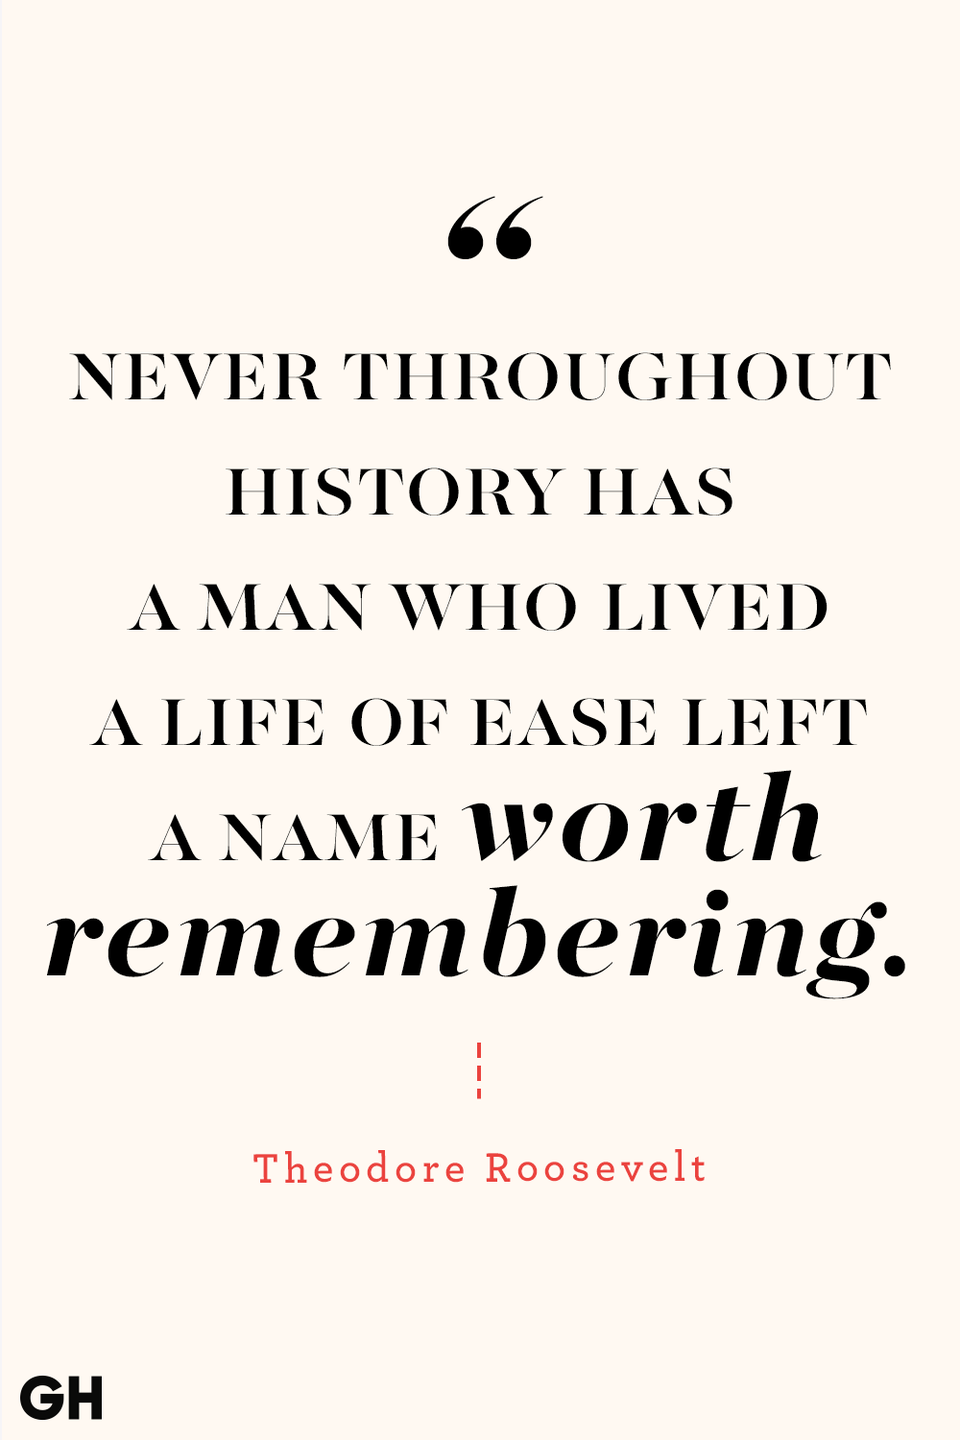 44) Theodore Roosevelt